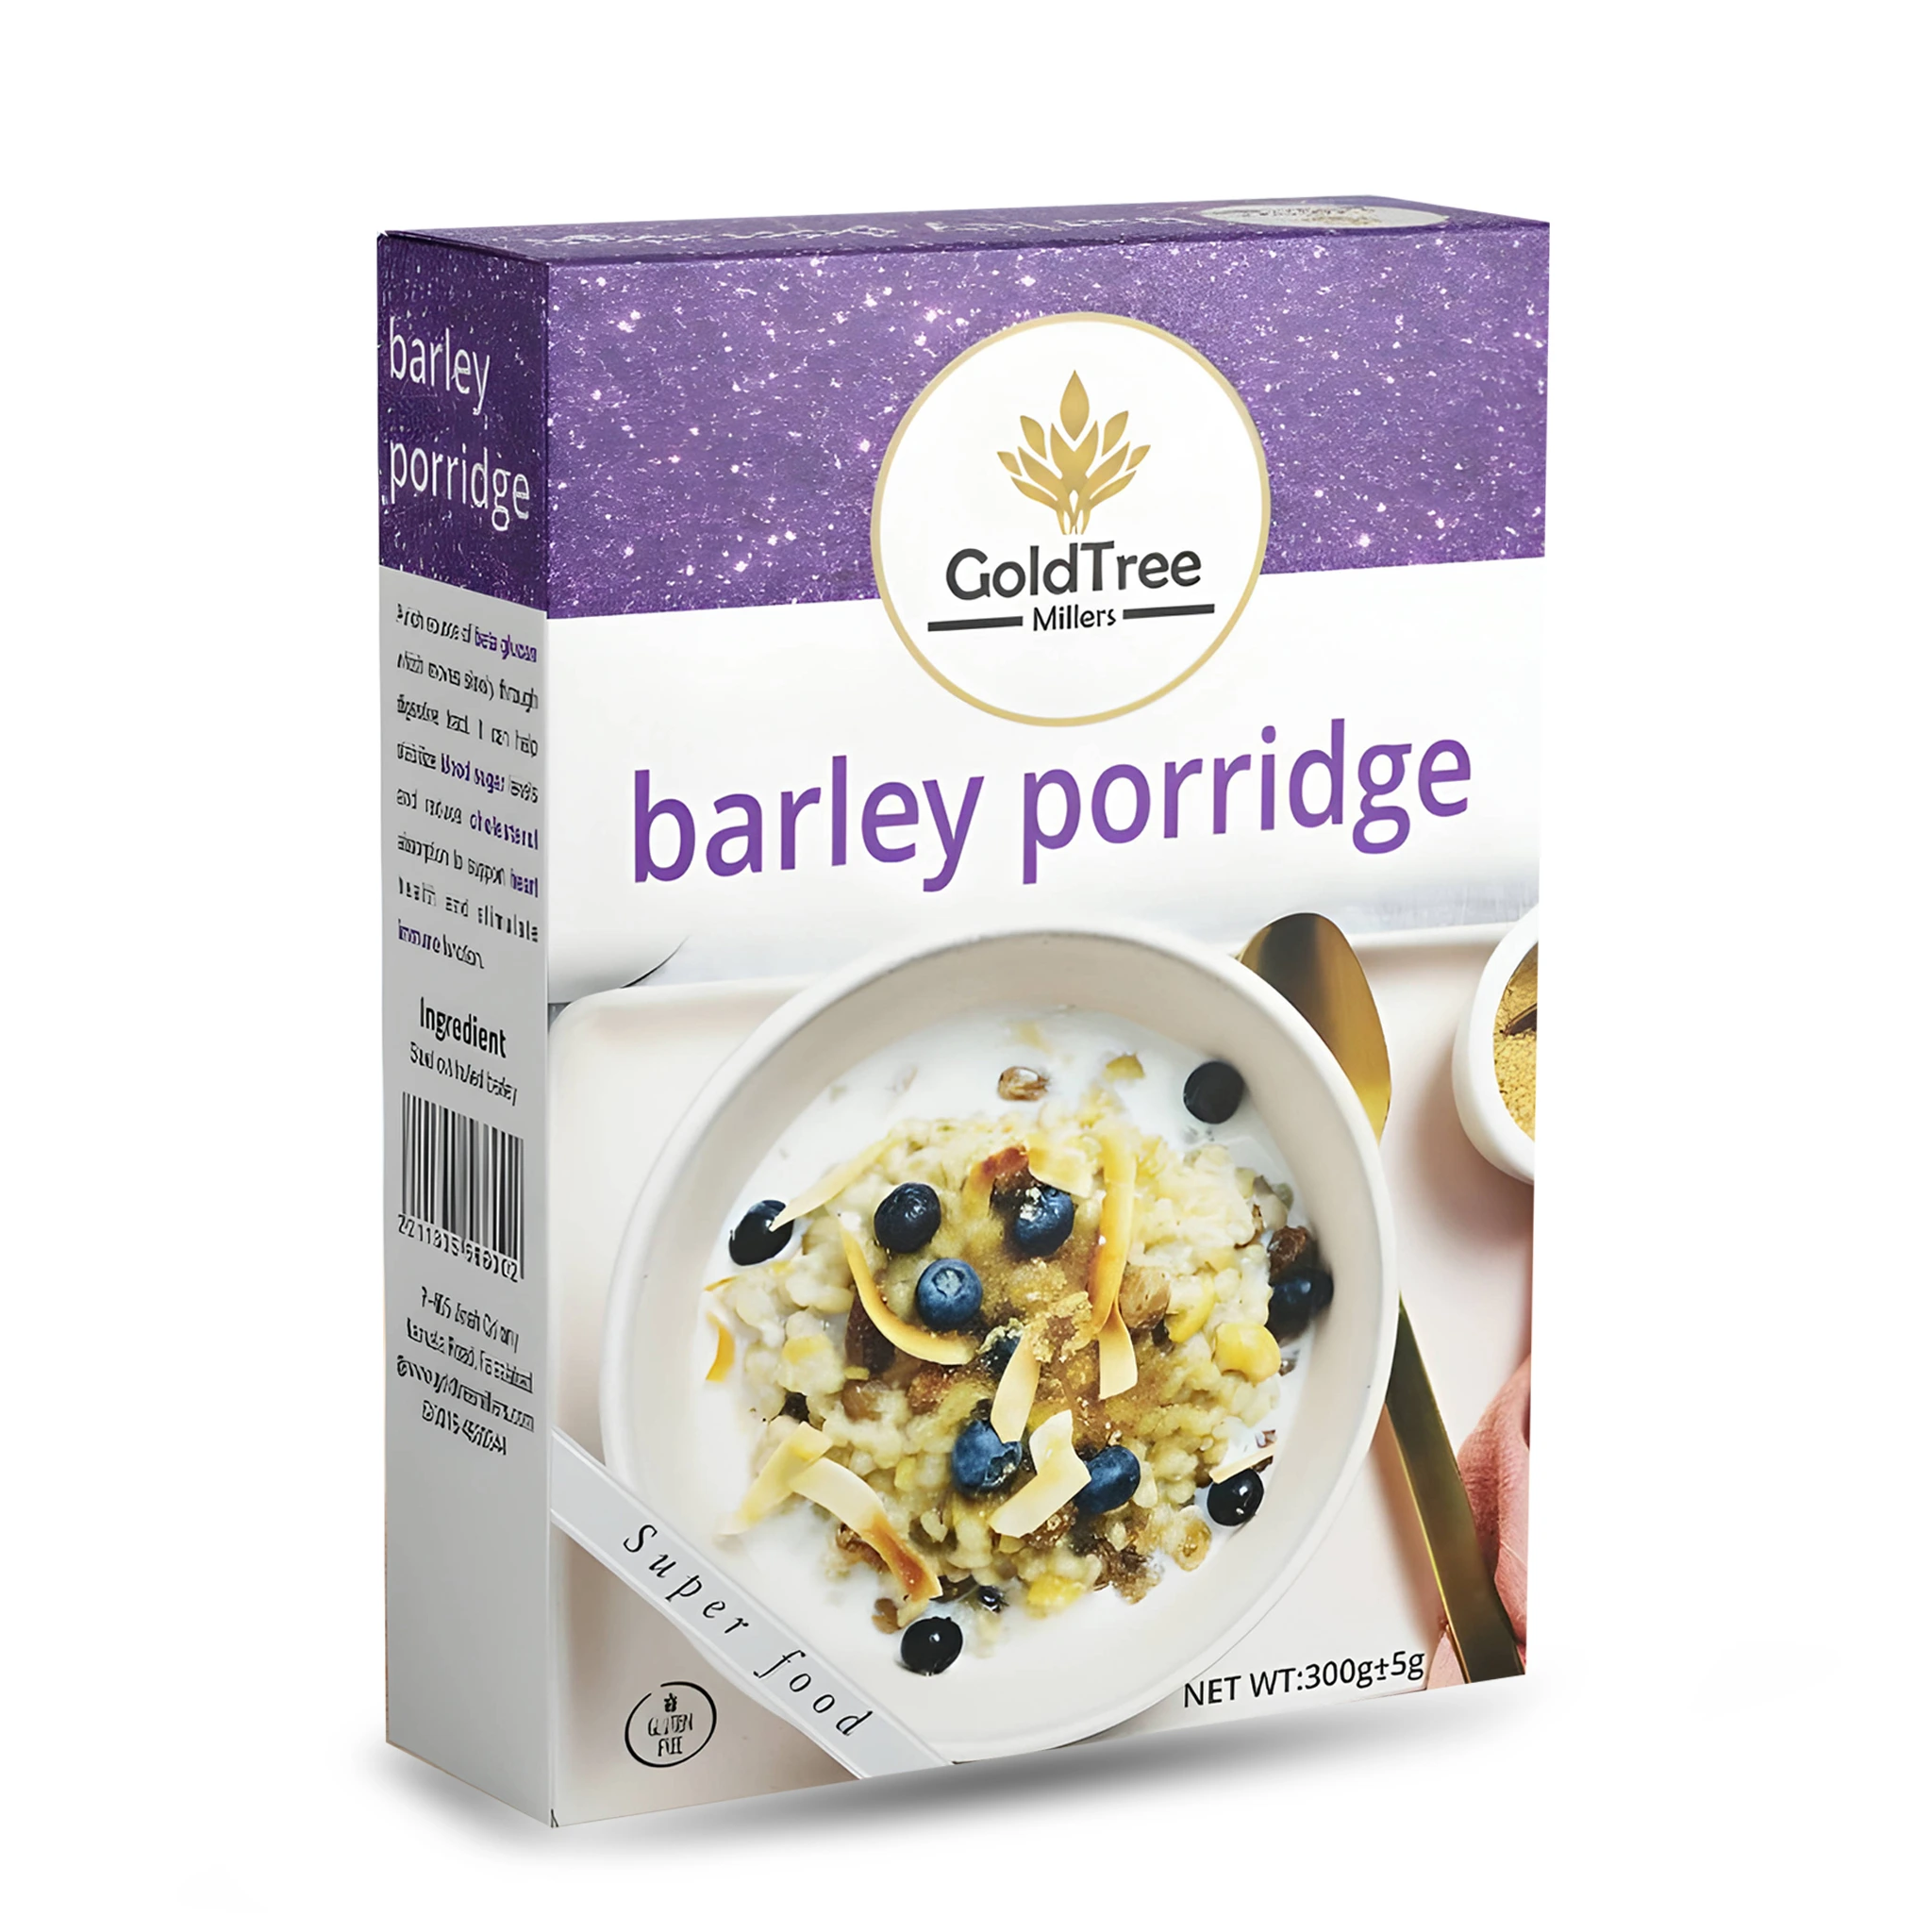 barley porridge benefits